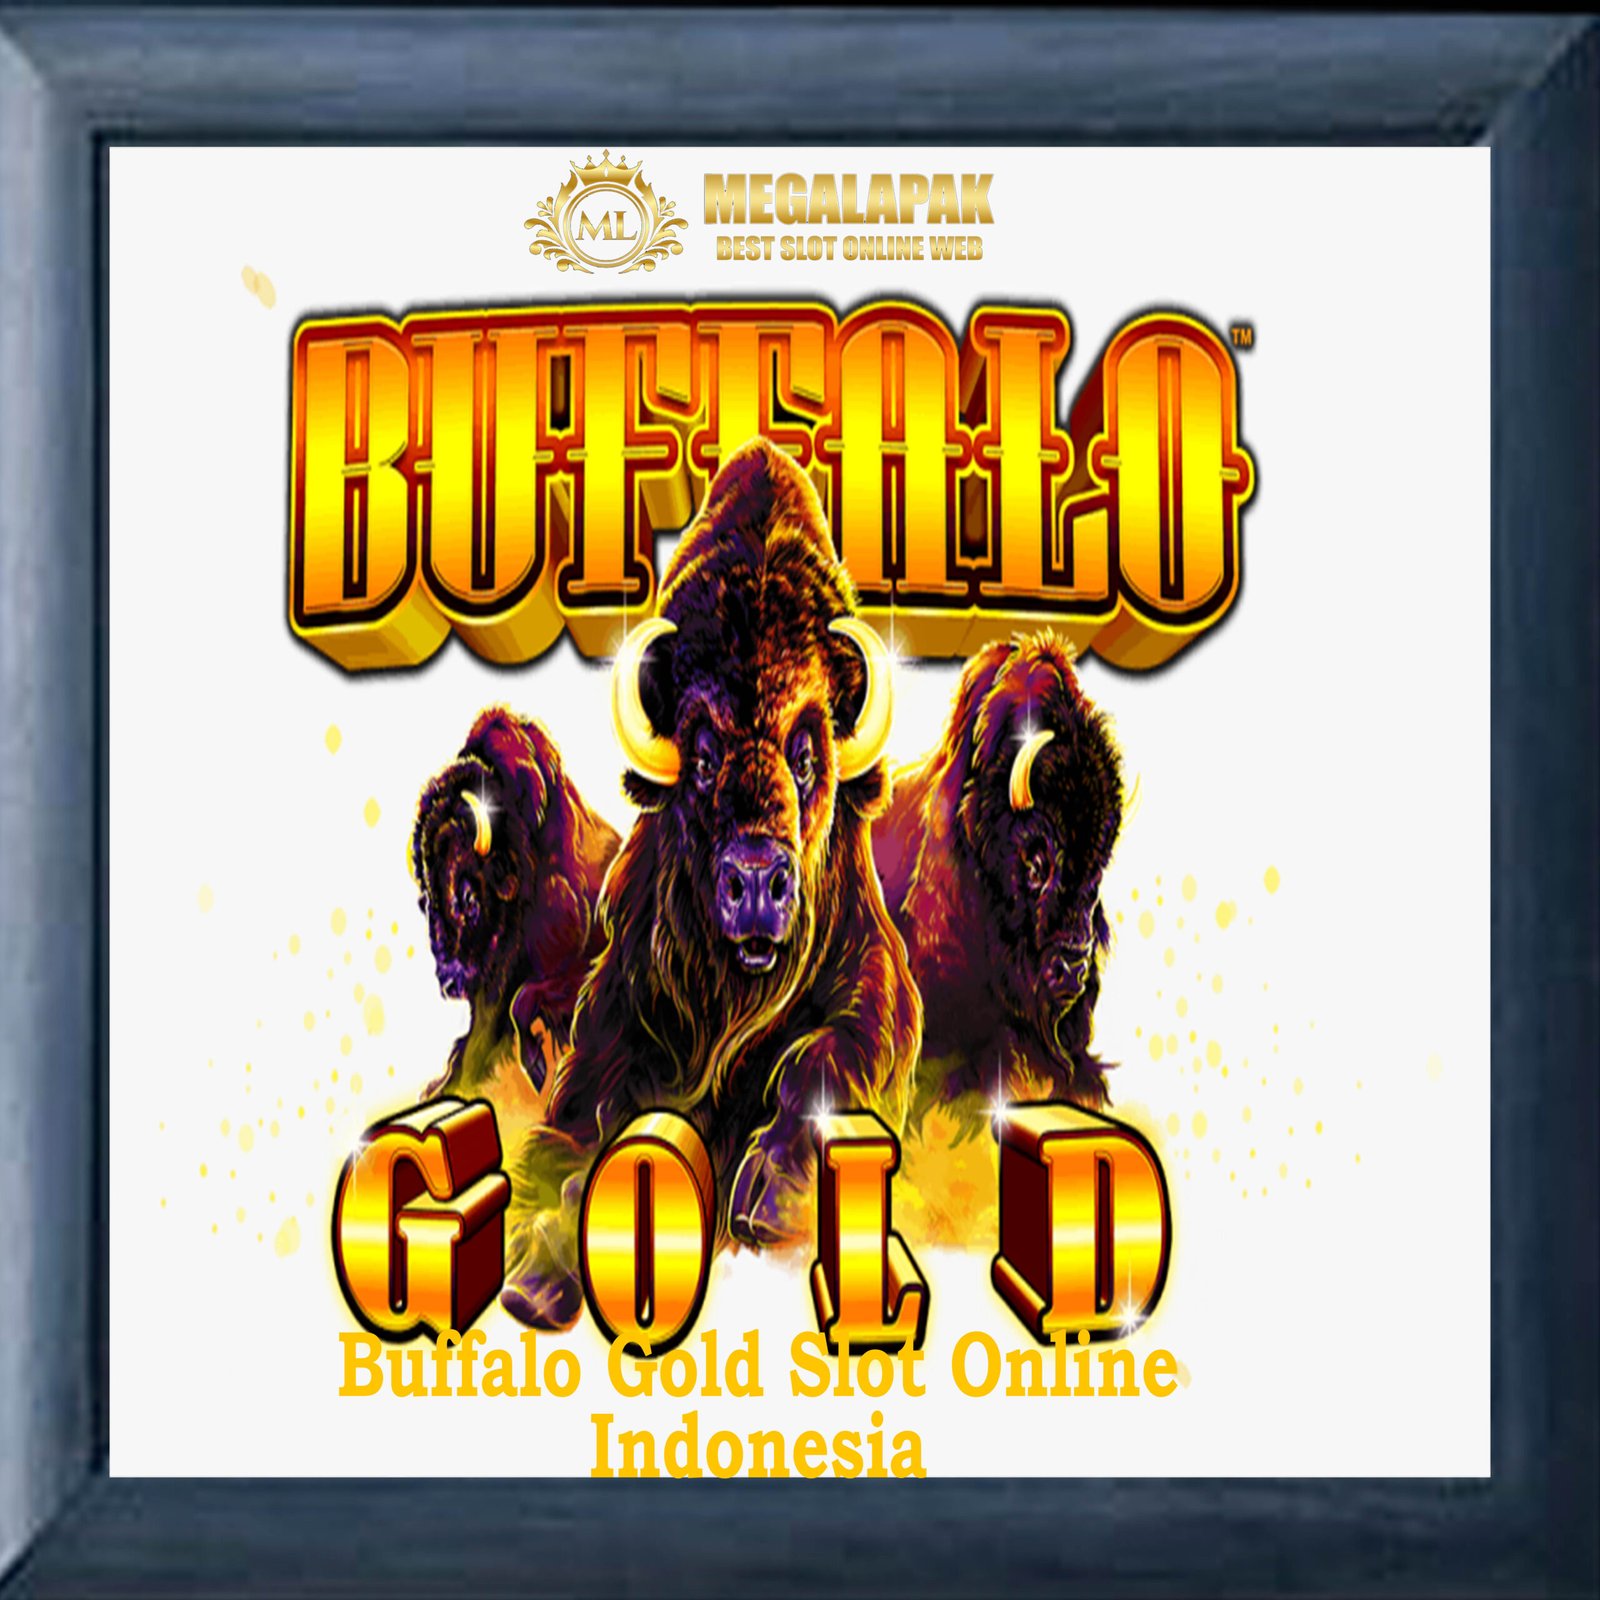 Buffalo Gold Slot Online Indonesia